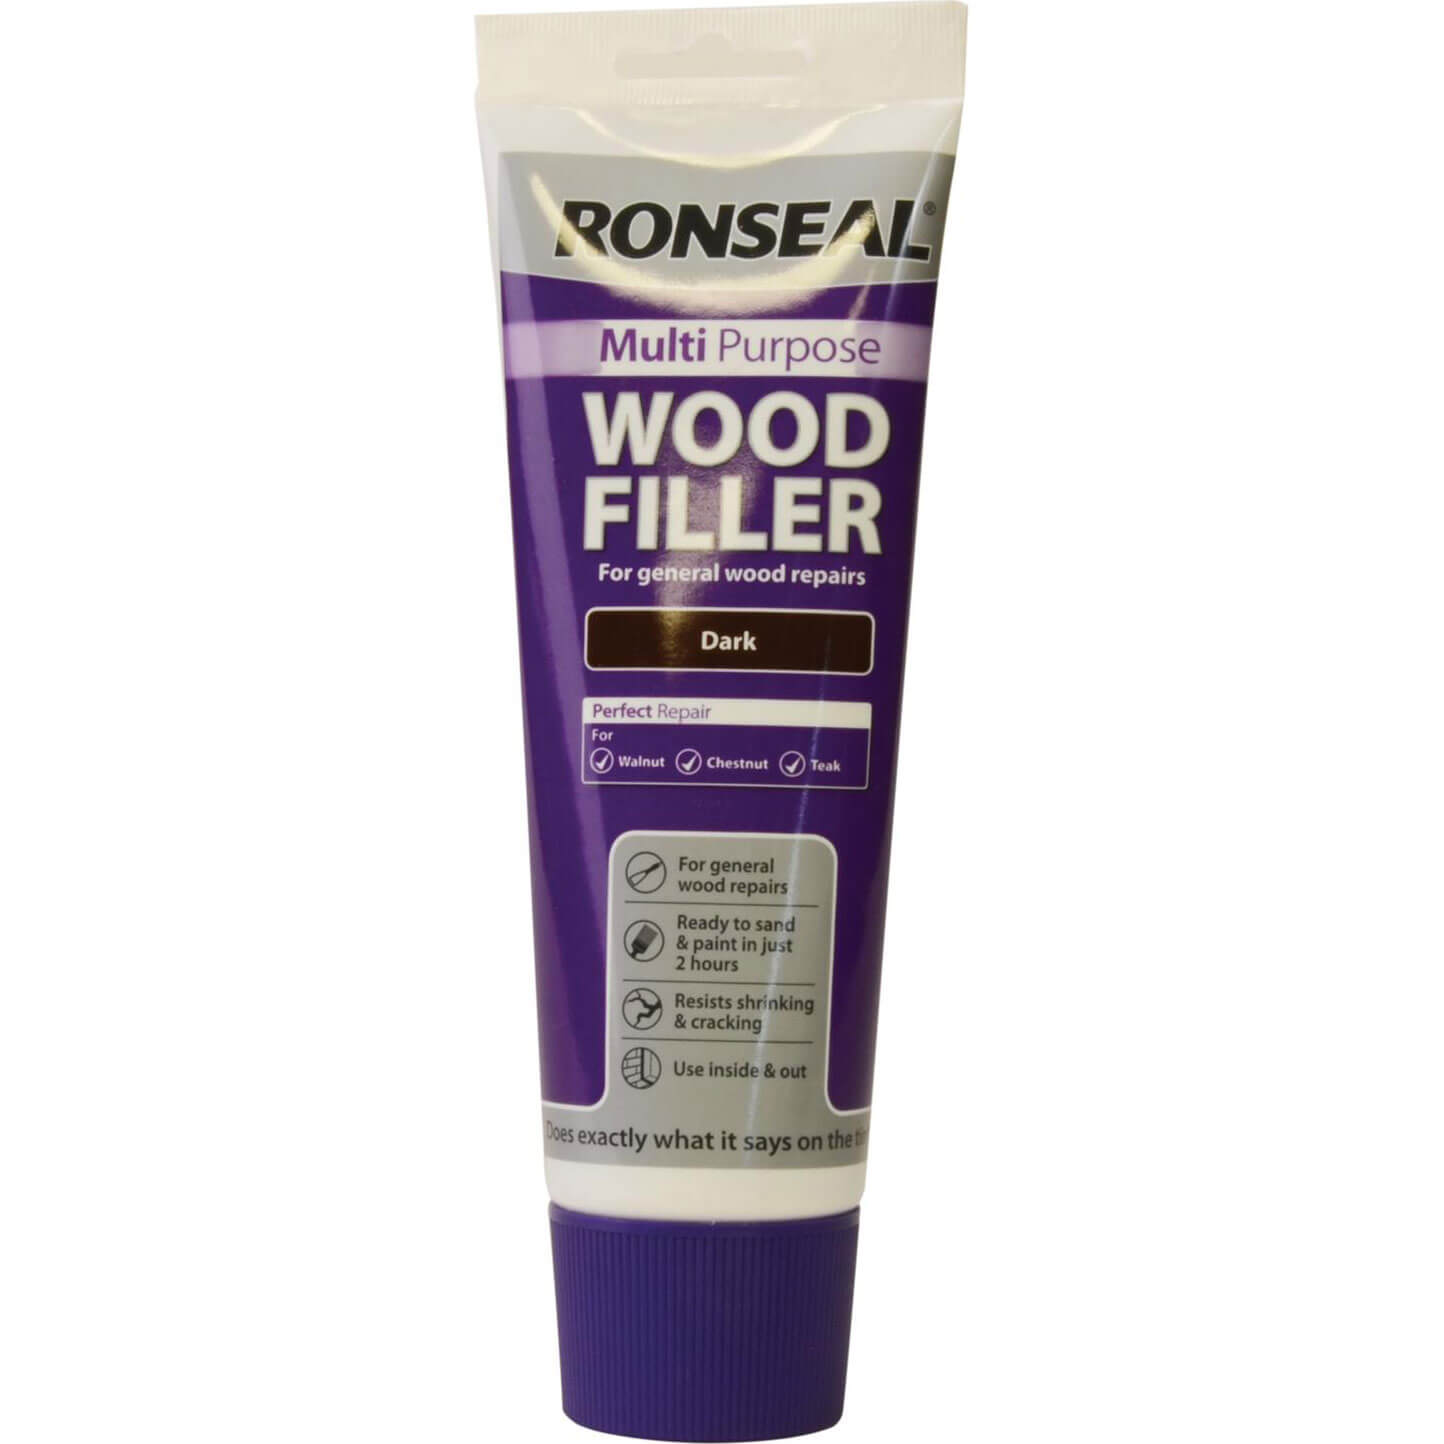 Image of Ronseal Multi Purpose Wood Filler Tube Dark 325g